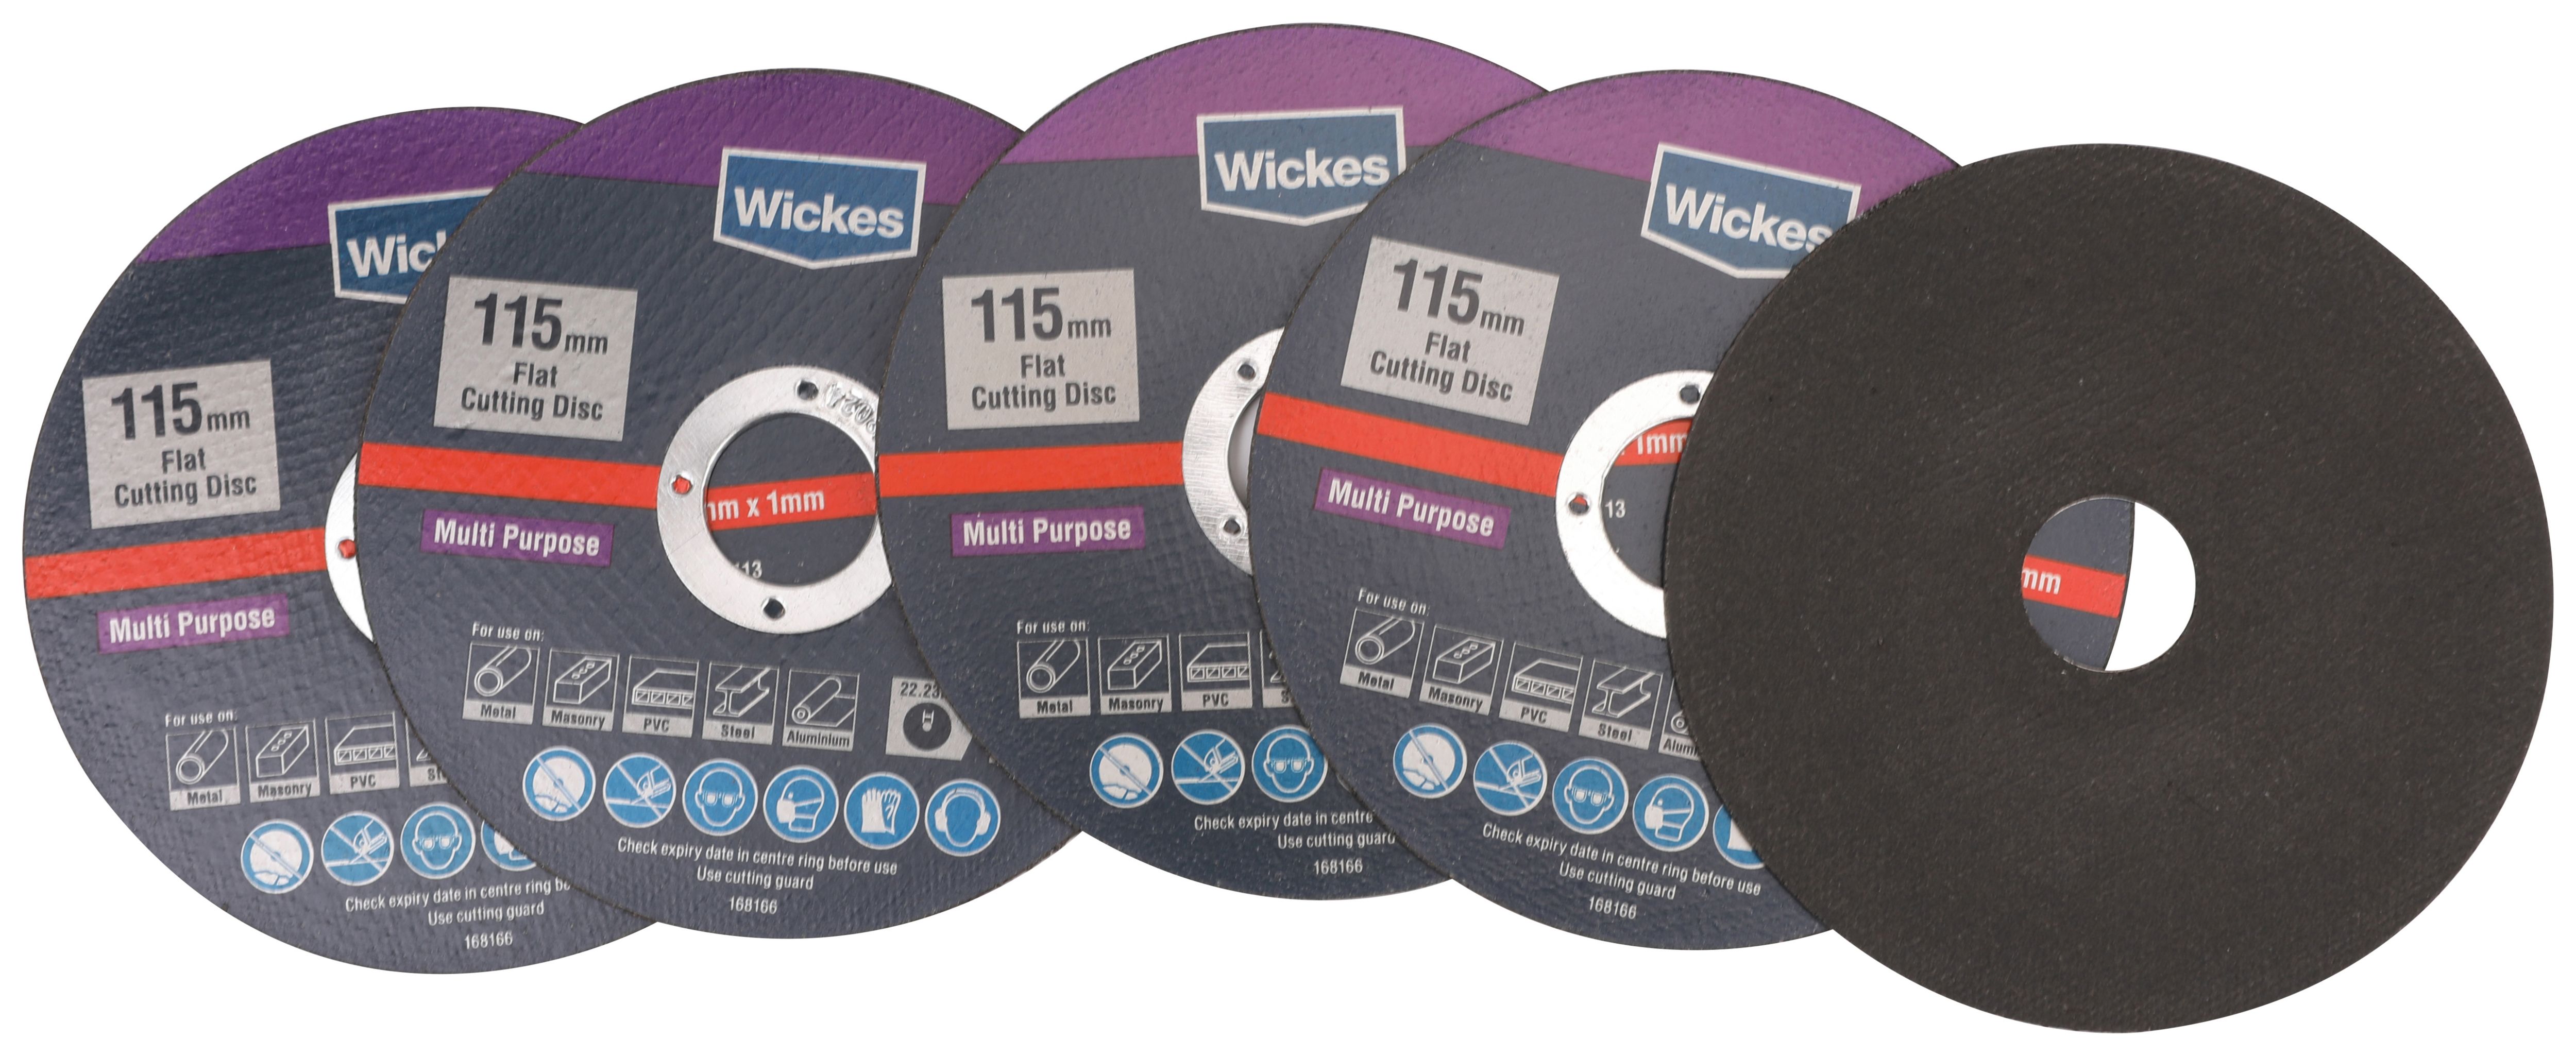 Wickes Multi-Purpose Flat Cutting Disc 115mm - Pack of 5